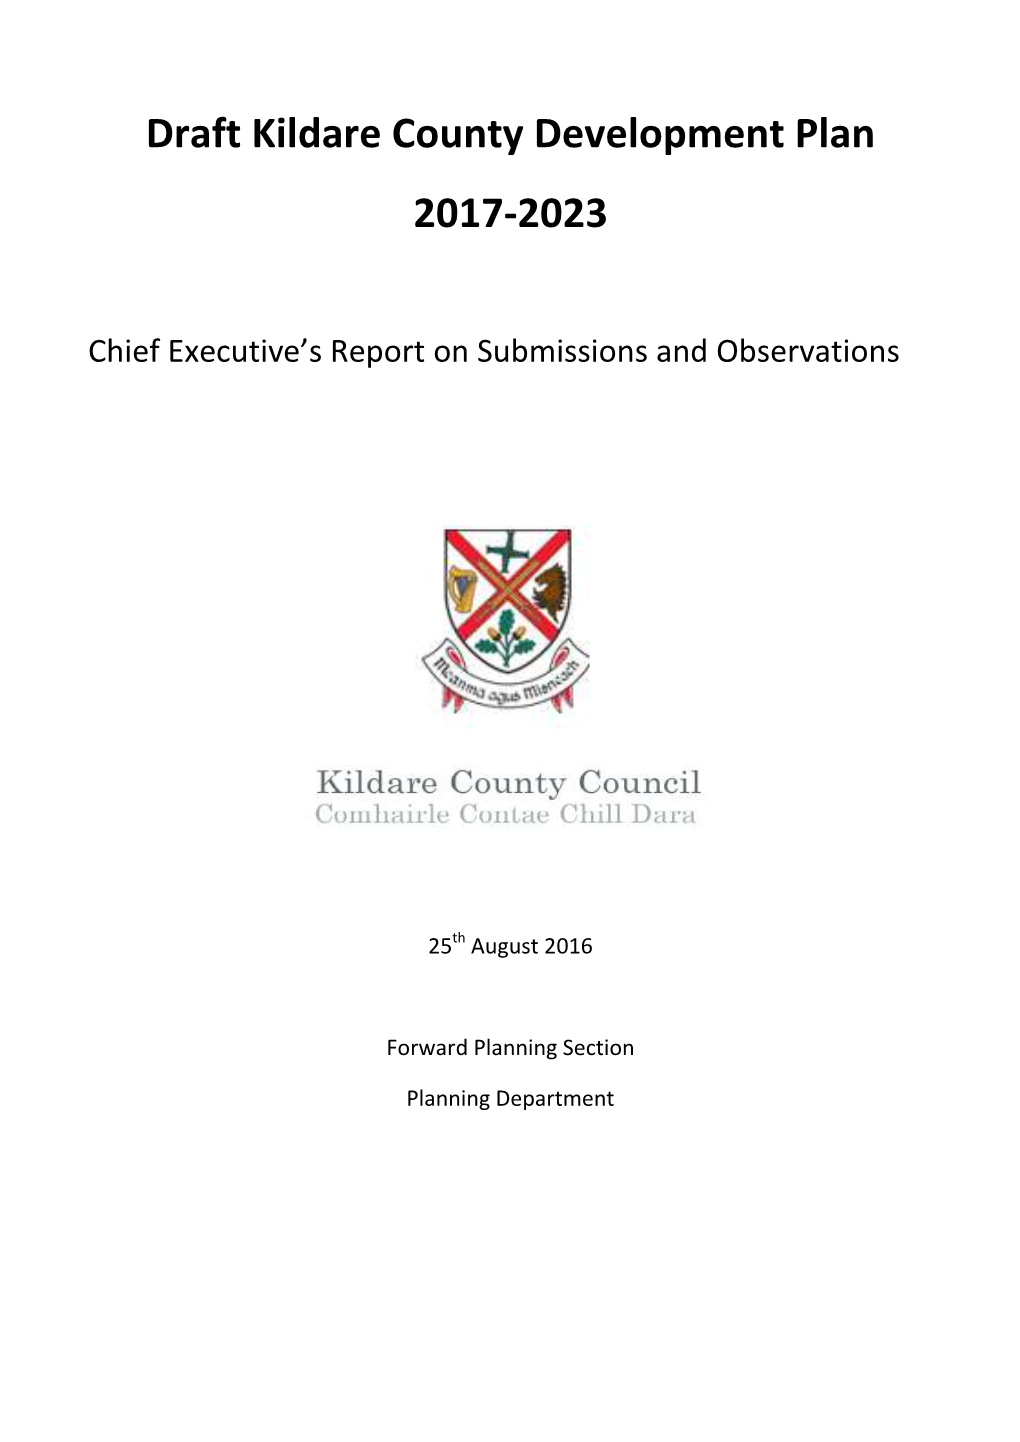 Draft Kildare County Development Plan 2017-2023